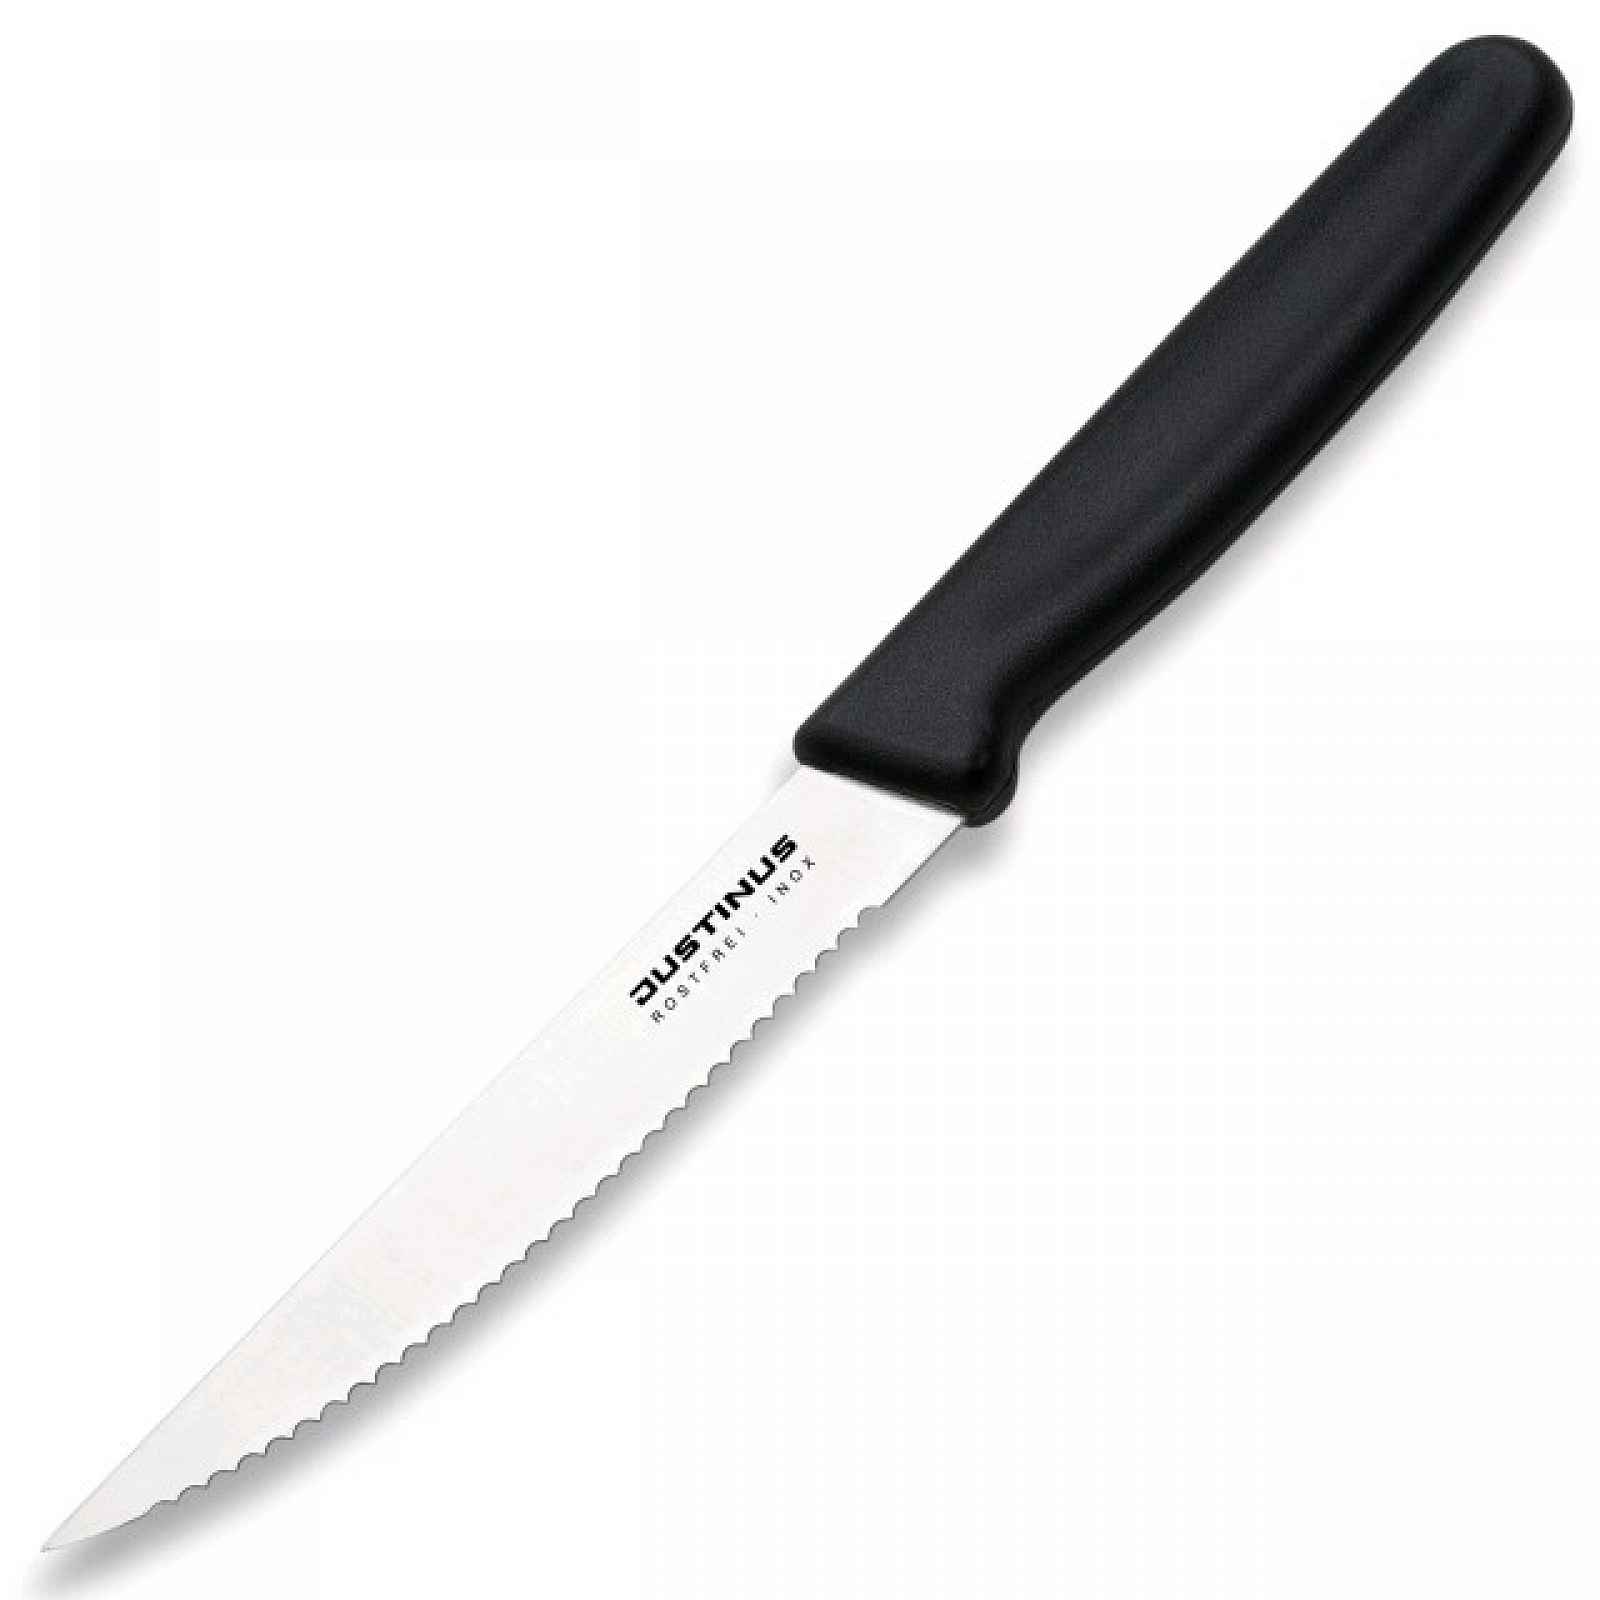 Nůž na steak FineCut, 11 cm